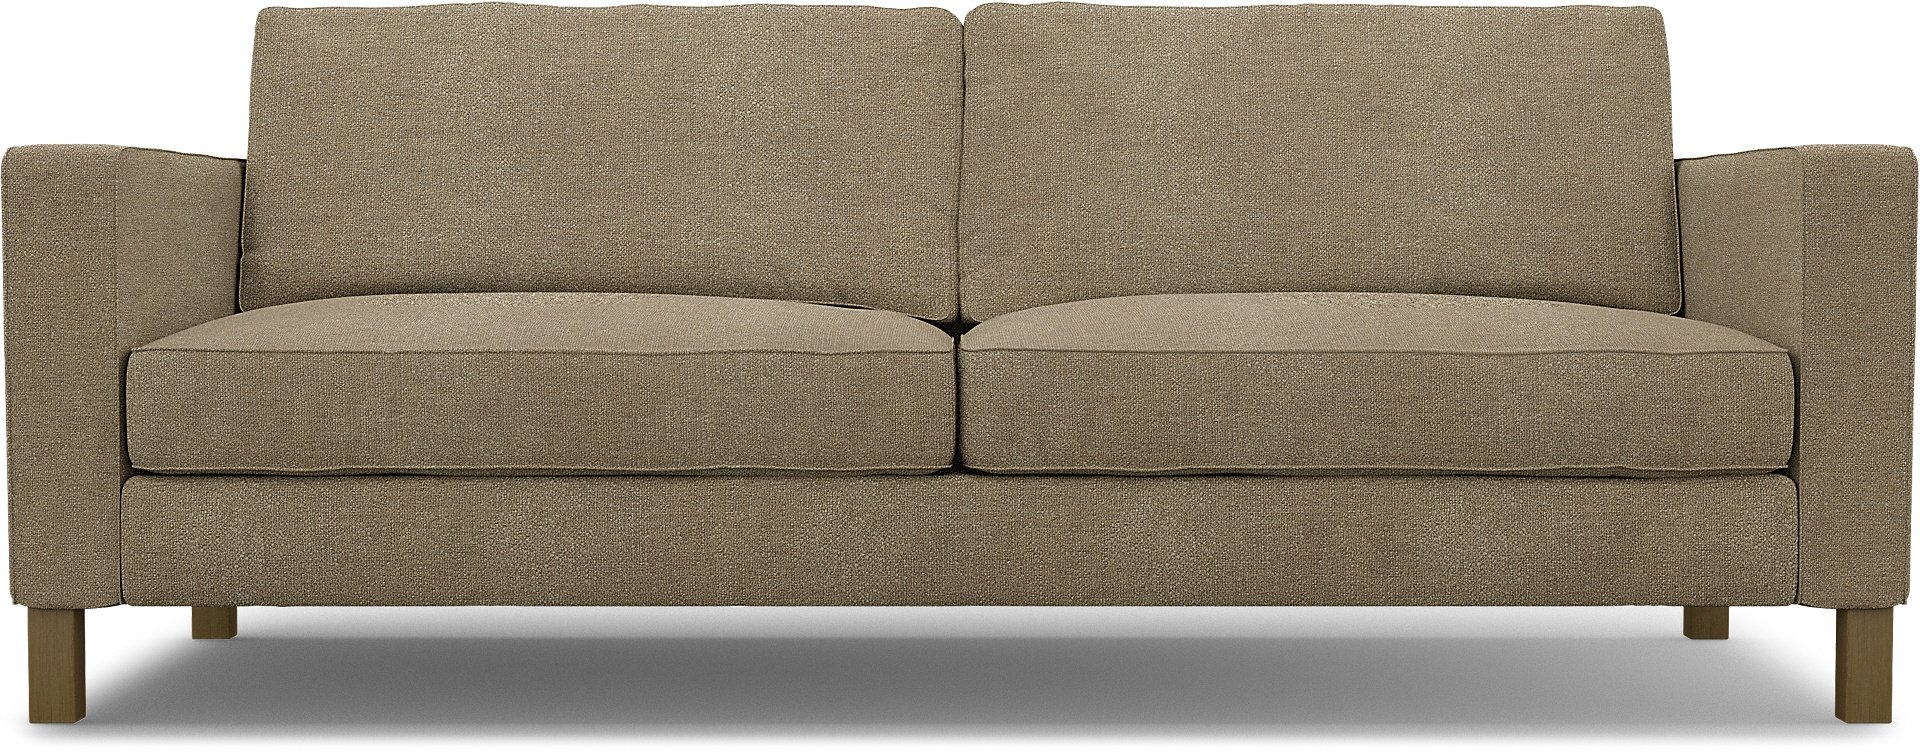 IKEA - Karlstad 3 Seater Sofa Cover, Pebble, Boucle & Texture - Bemz